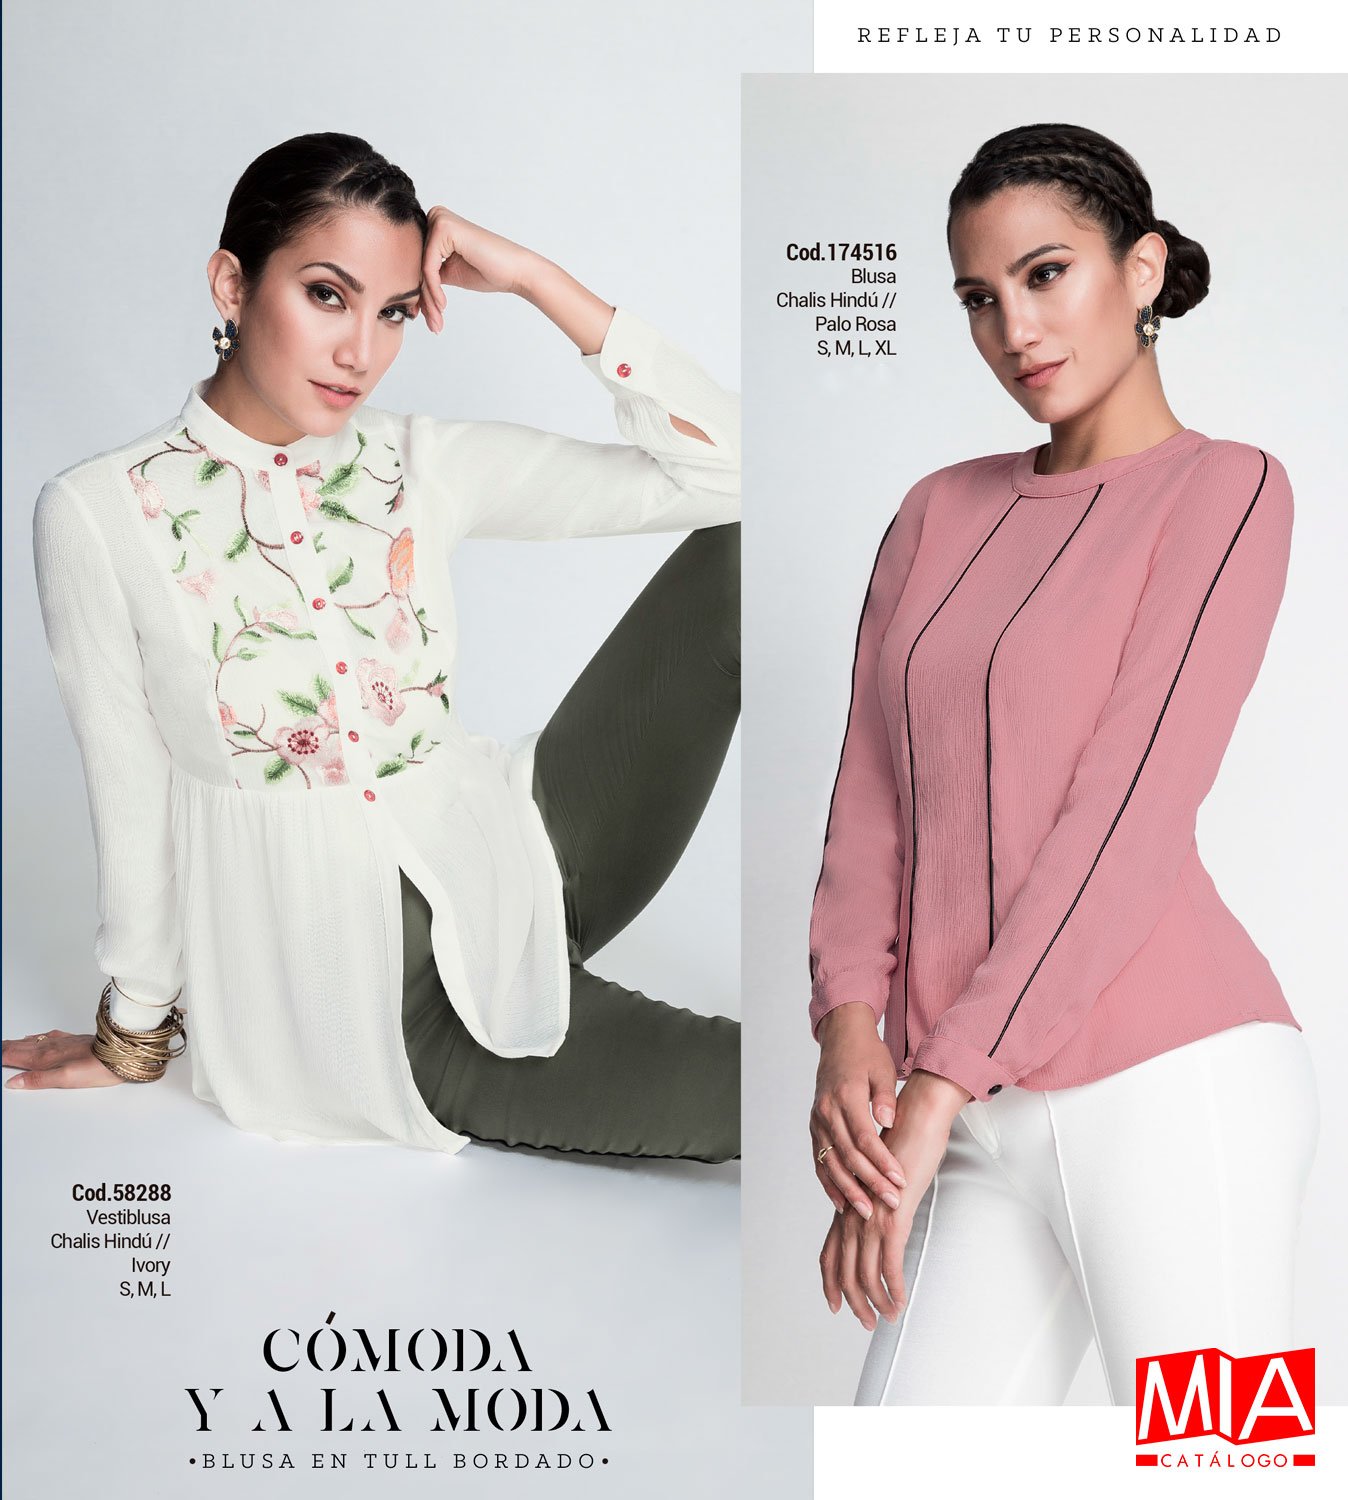 Mia on Twitter: "Tendencias en blusas para mujeres modernas 😍 Colección #FashionRevolution de #MiaStore #Blusas Chalis hindú Solicita tu catálogo: Whatsapp: 941446581 Regístrate: https://t.co/wvlUIpbSJj #VentaPorCatálogo 💰💵 #moda ...